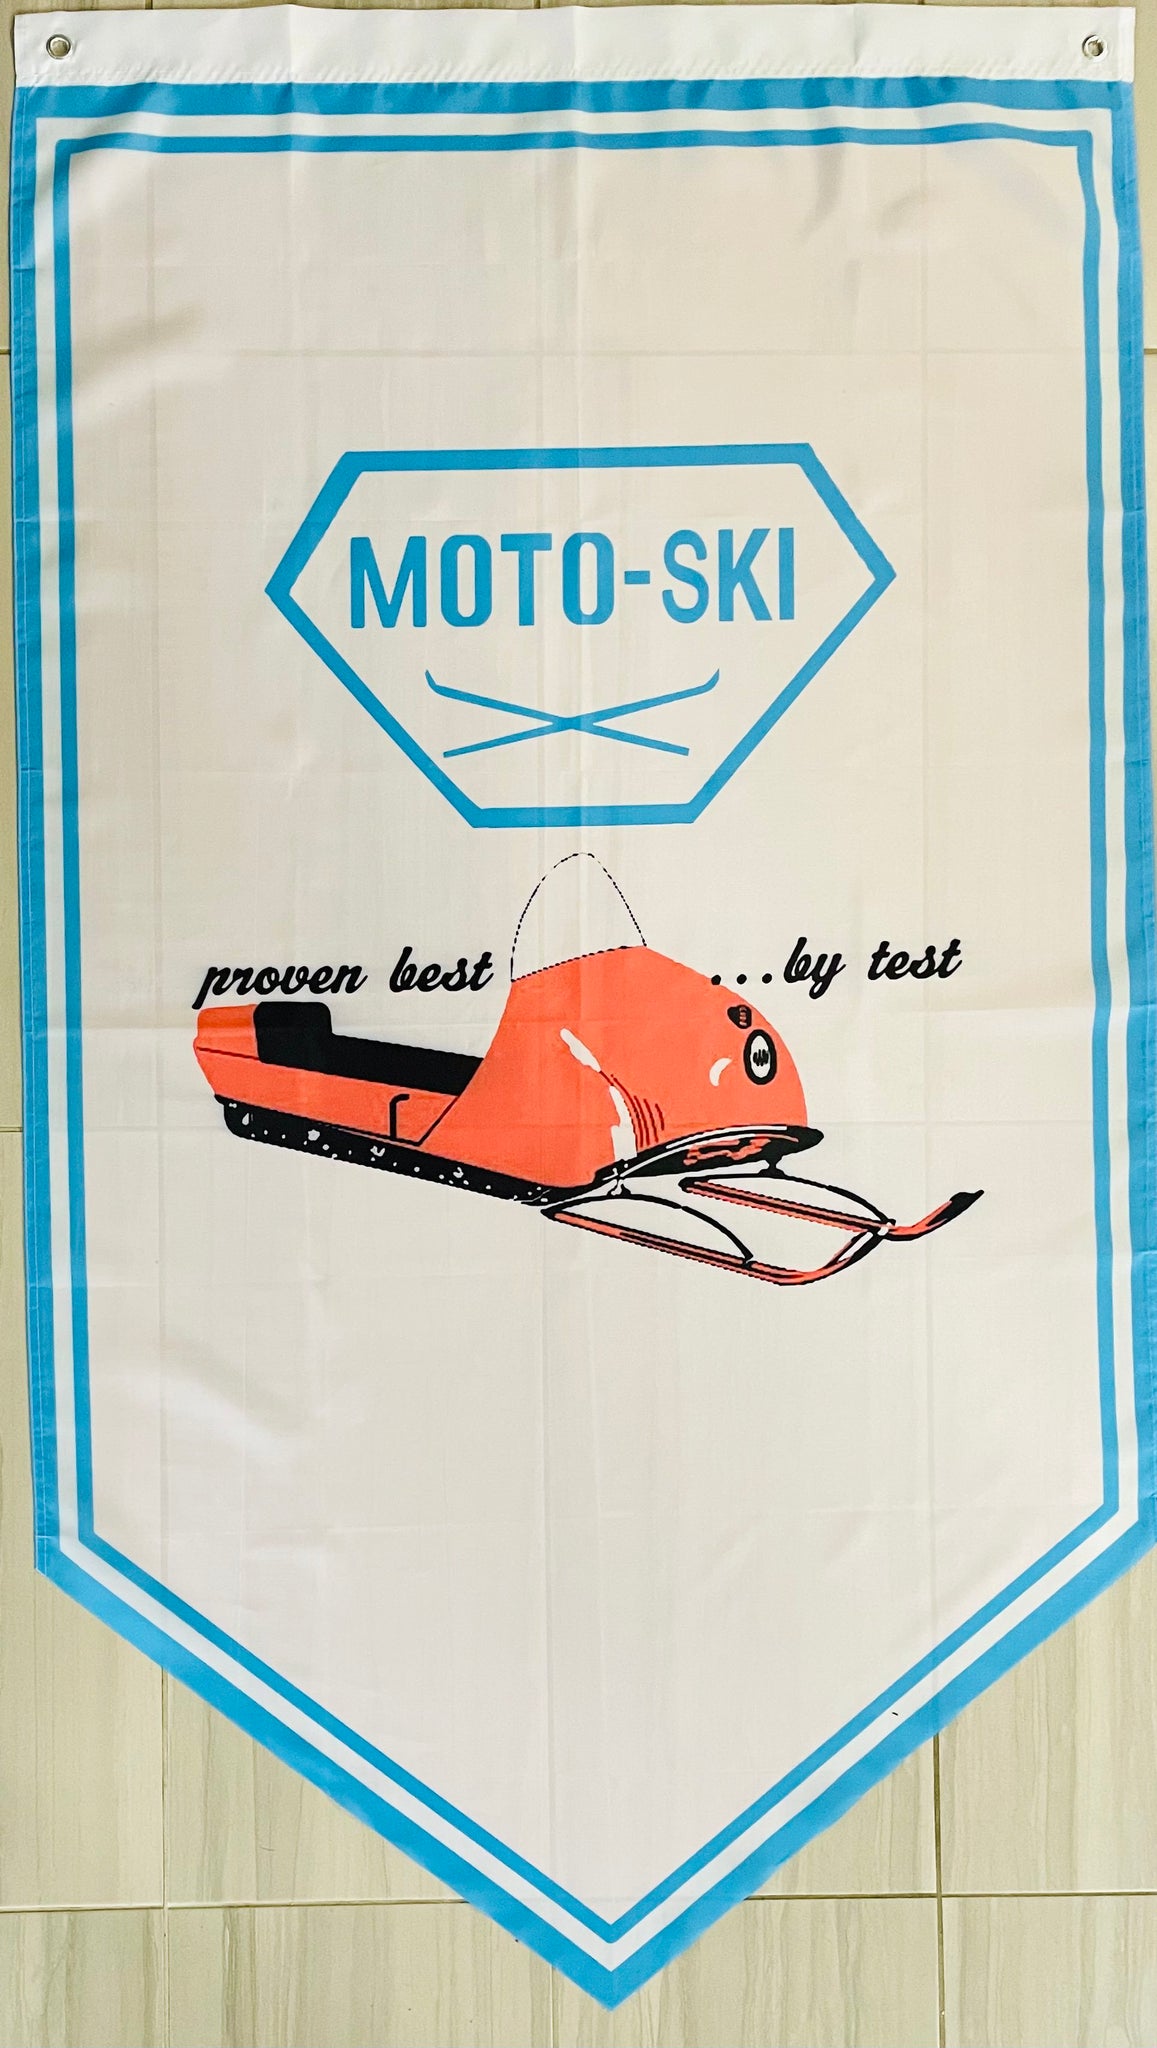 MOTO-SKI SNOWMOBILES TRIANGLE 3x5ft FLAG BANNER MAN CAVE GARAGE